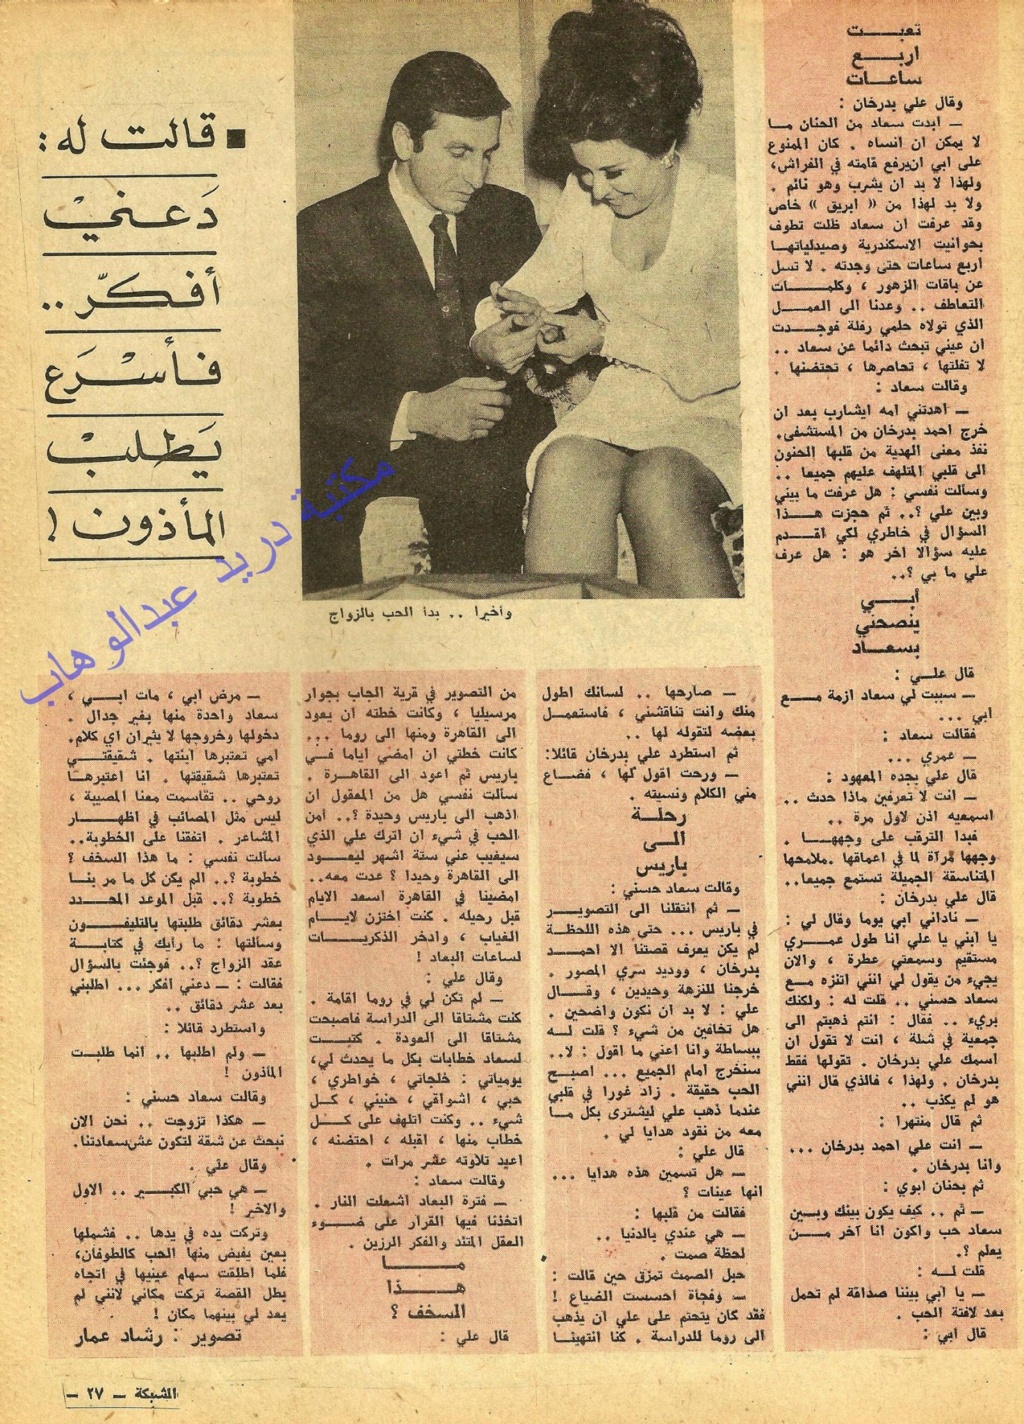 بدرخان - حوار صحفي : قصة حب سعاد حسني وعلي بدرخان 1970 م 4144